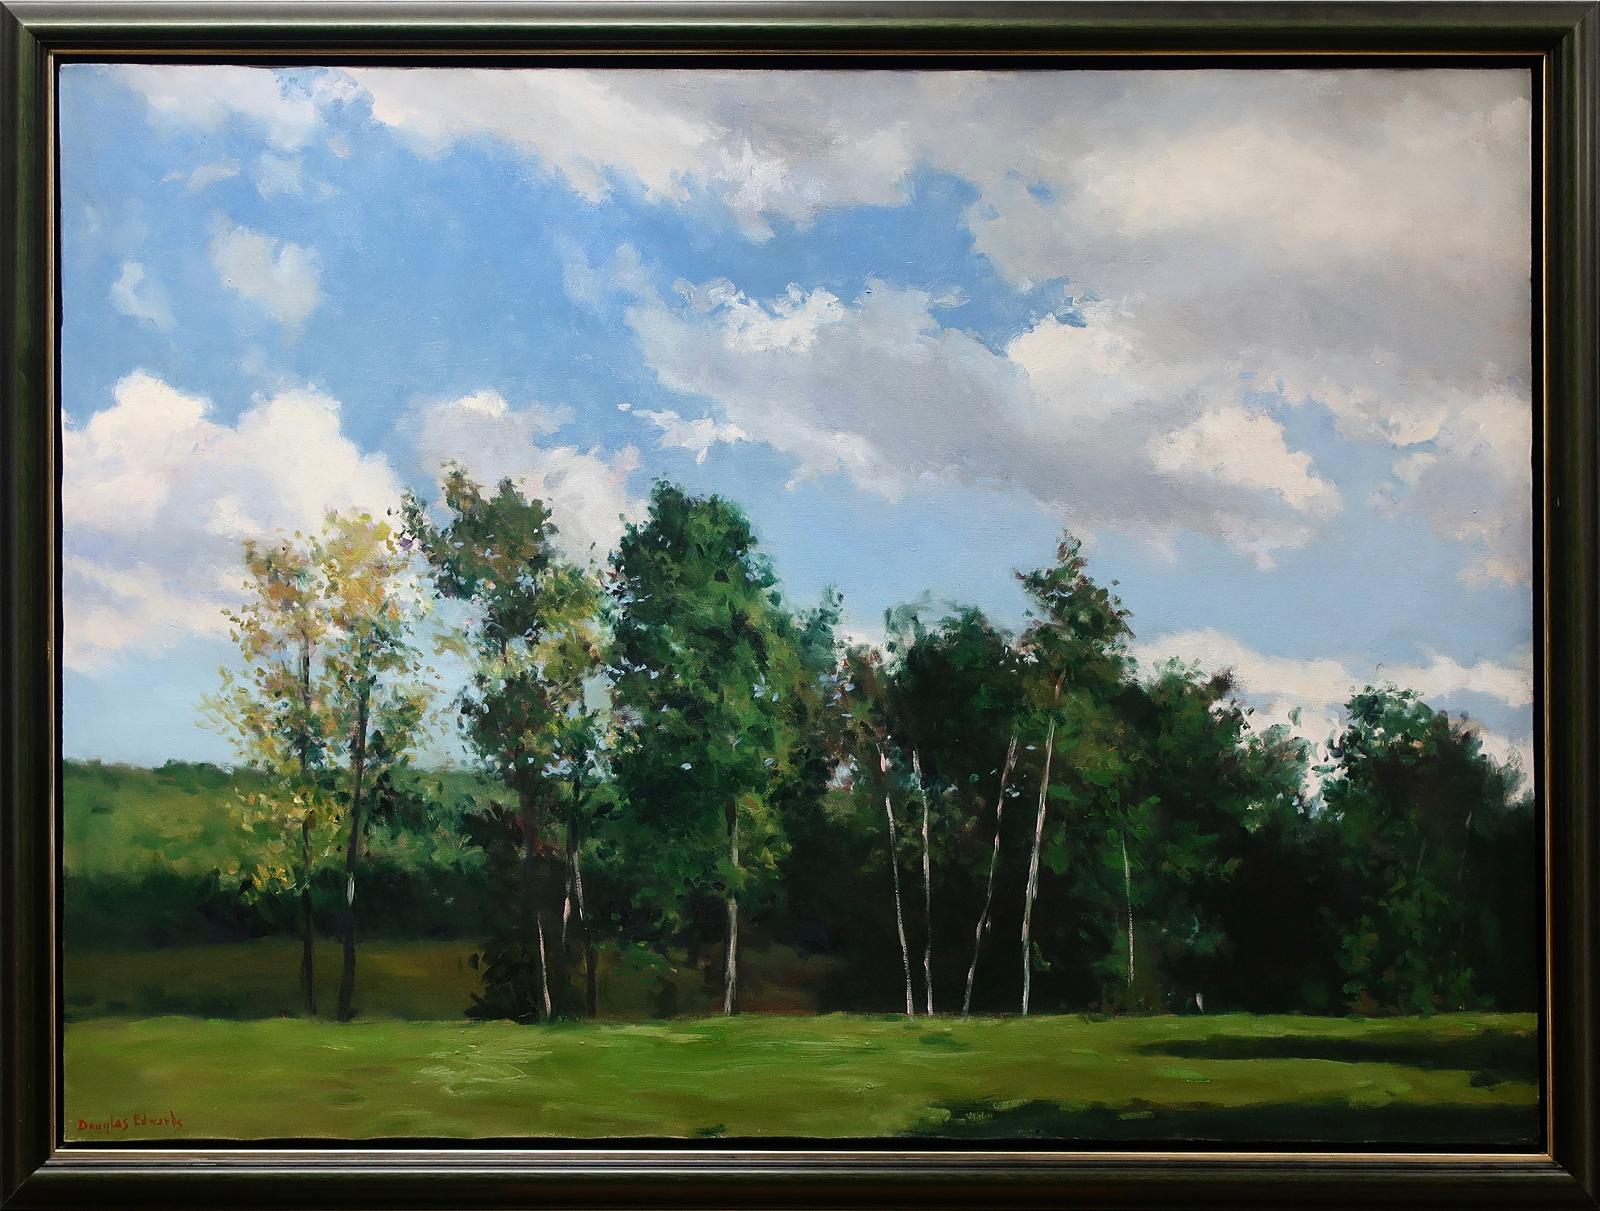 Douglas Edwards (1954) - Untitled (Summer Landscape)